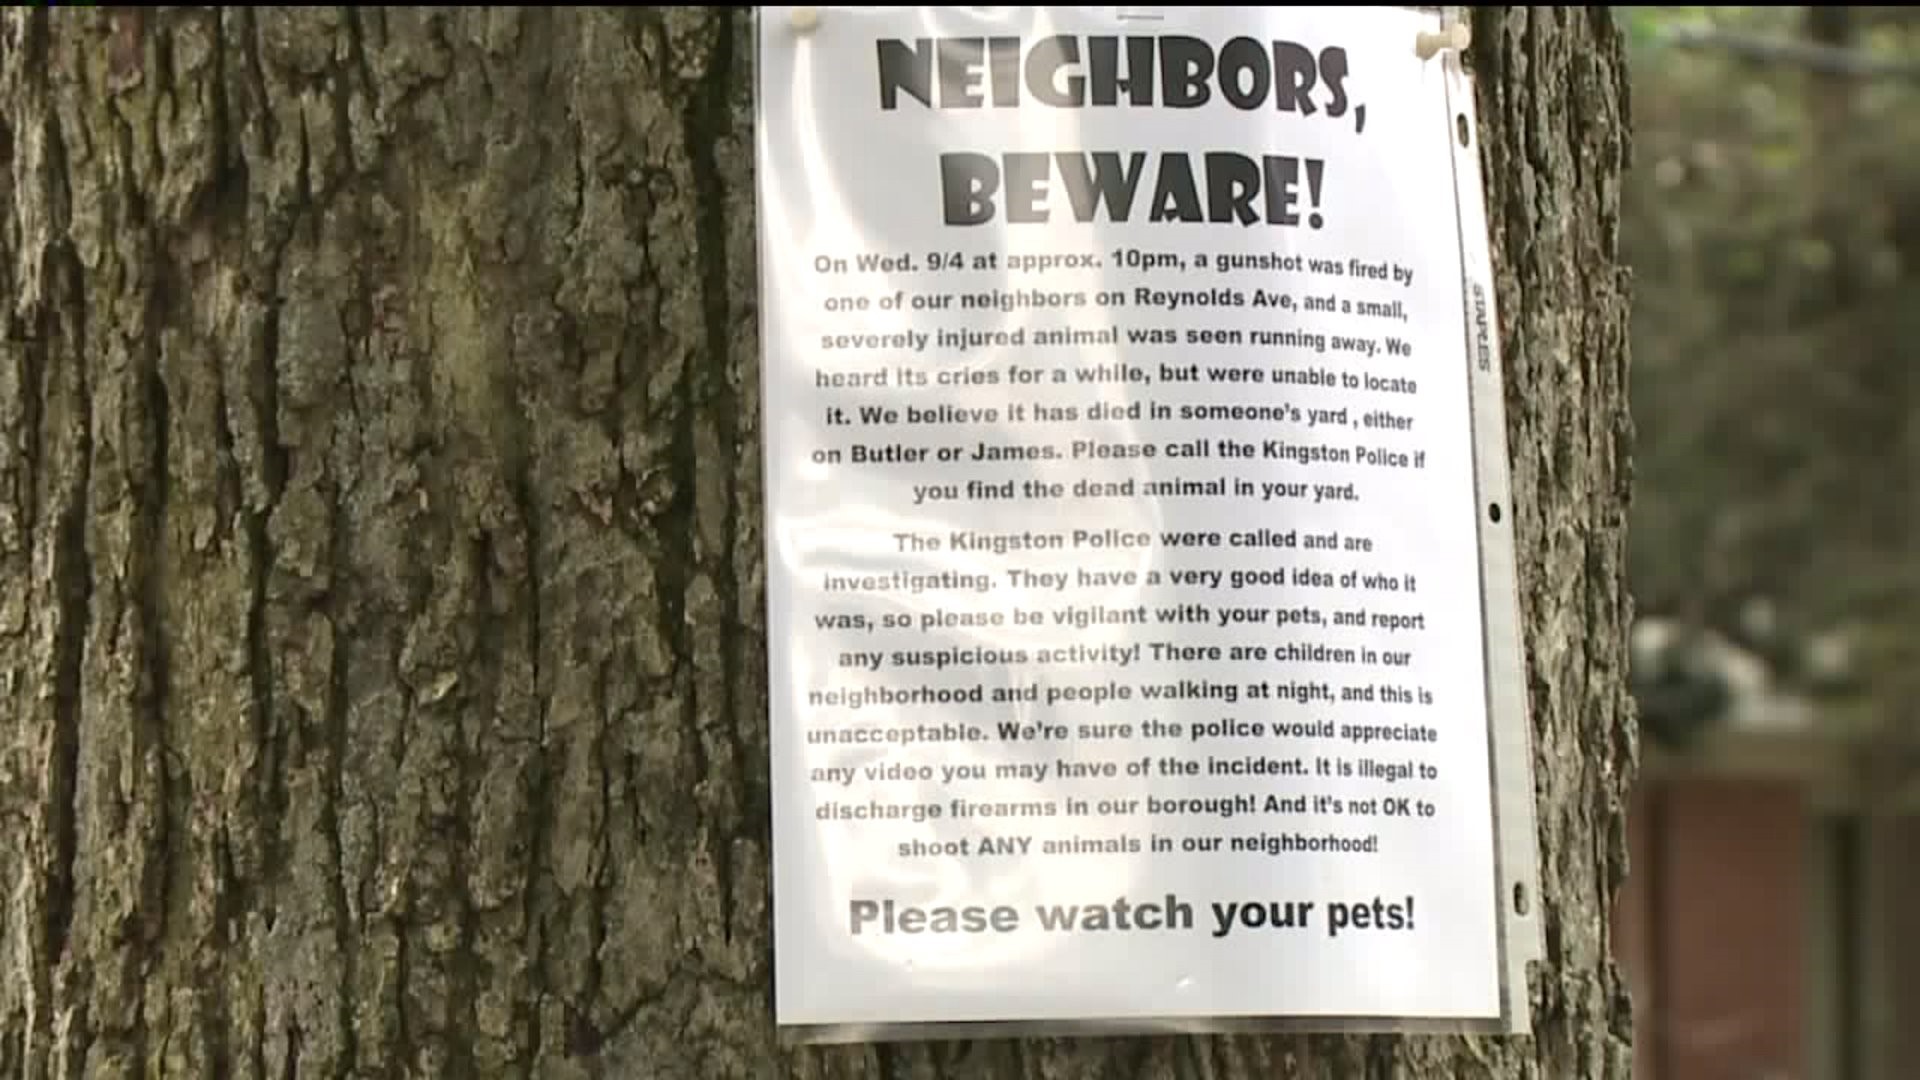 'Neighbors, beware!' - Posters Warn Kingston Residents of Animal Shooter